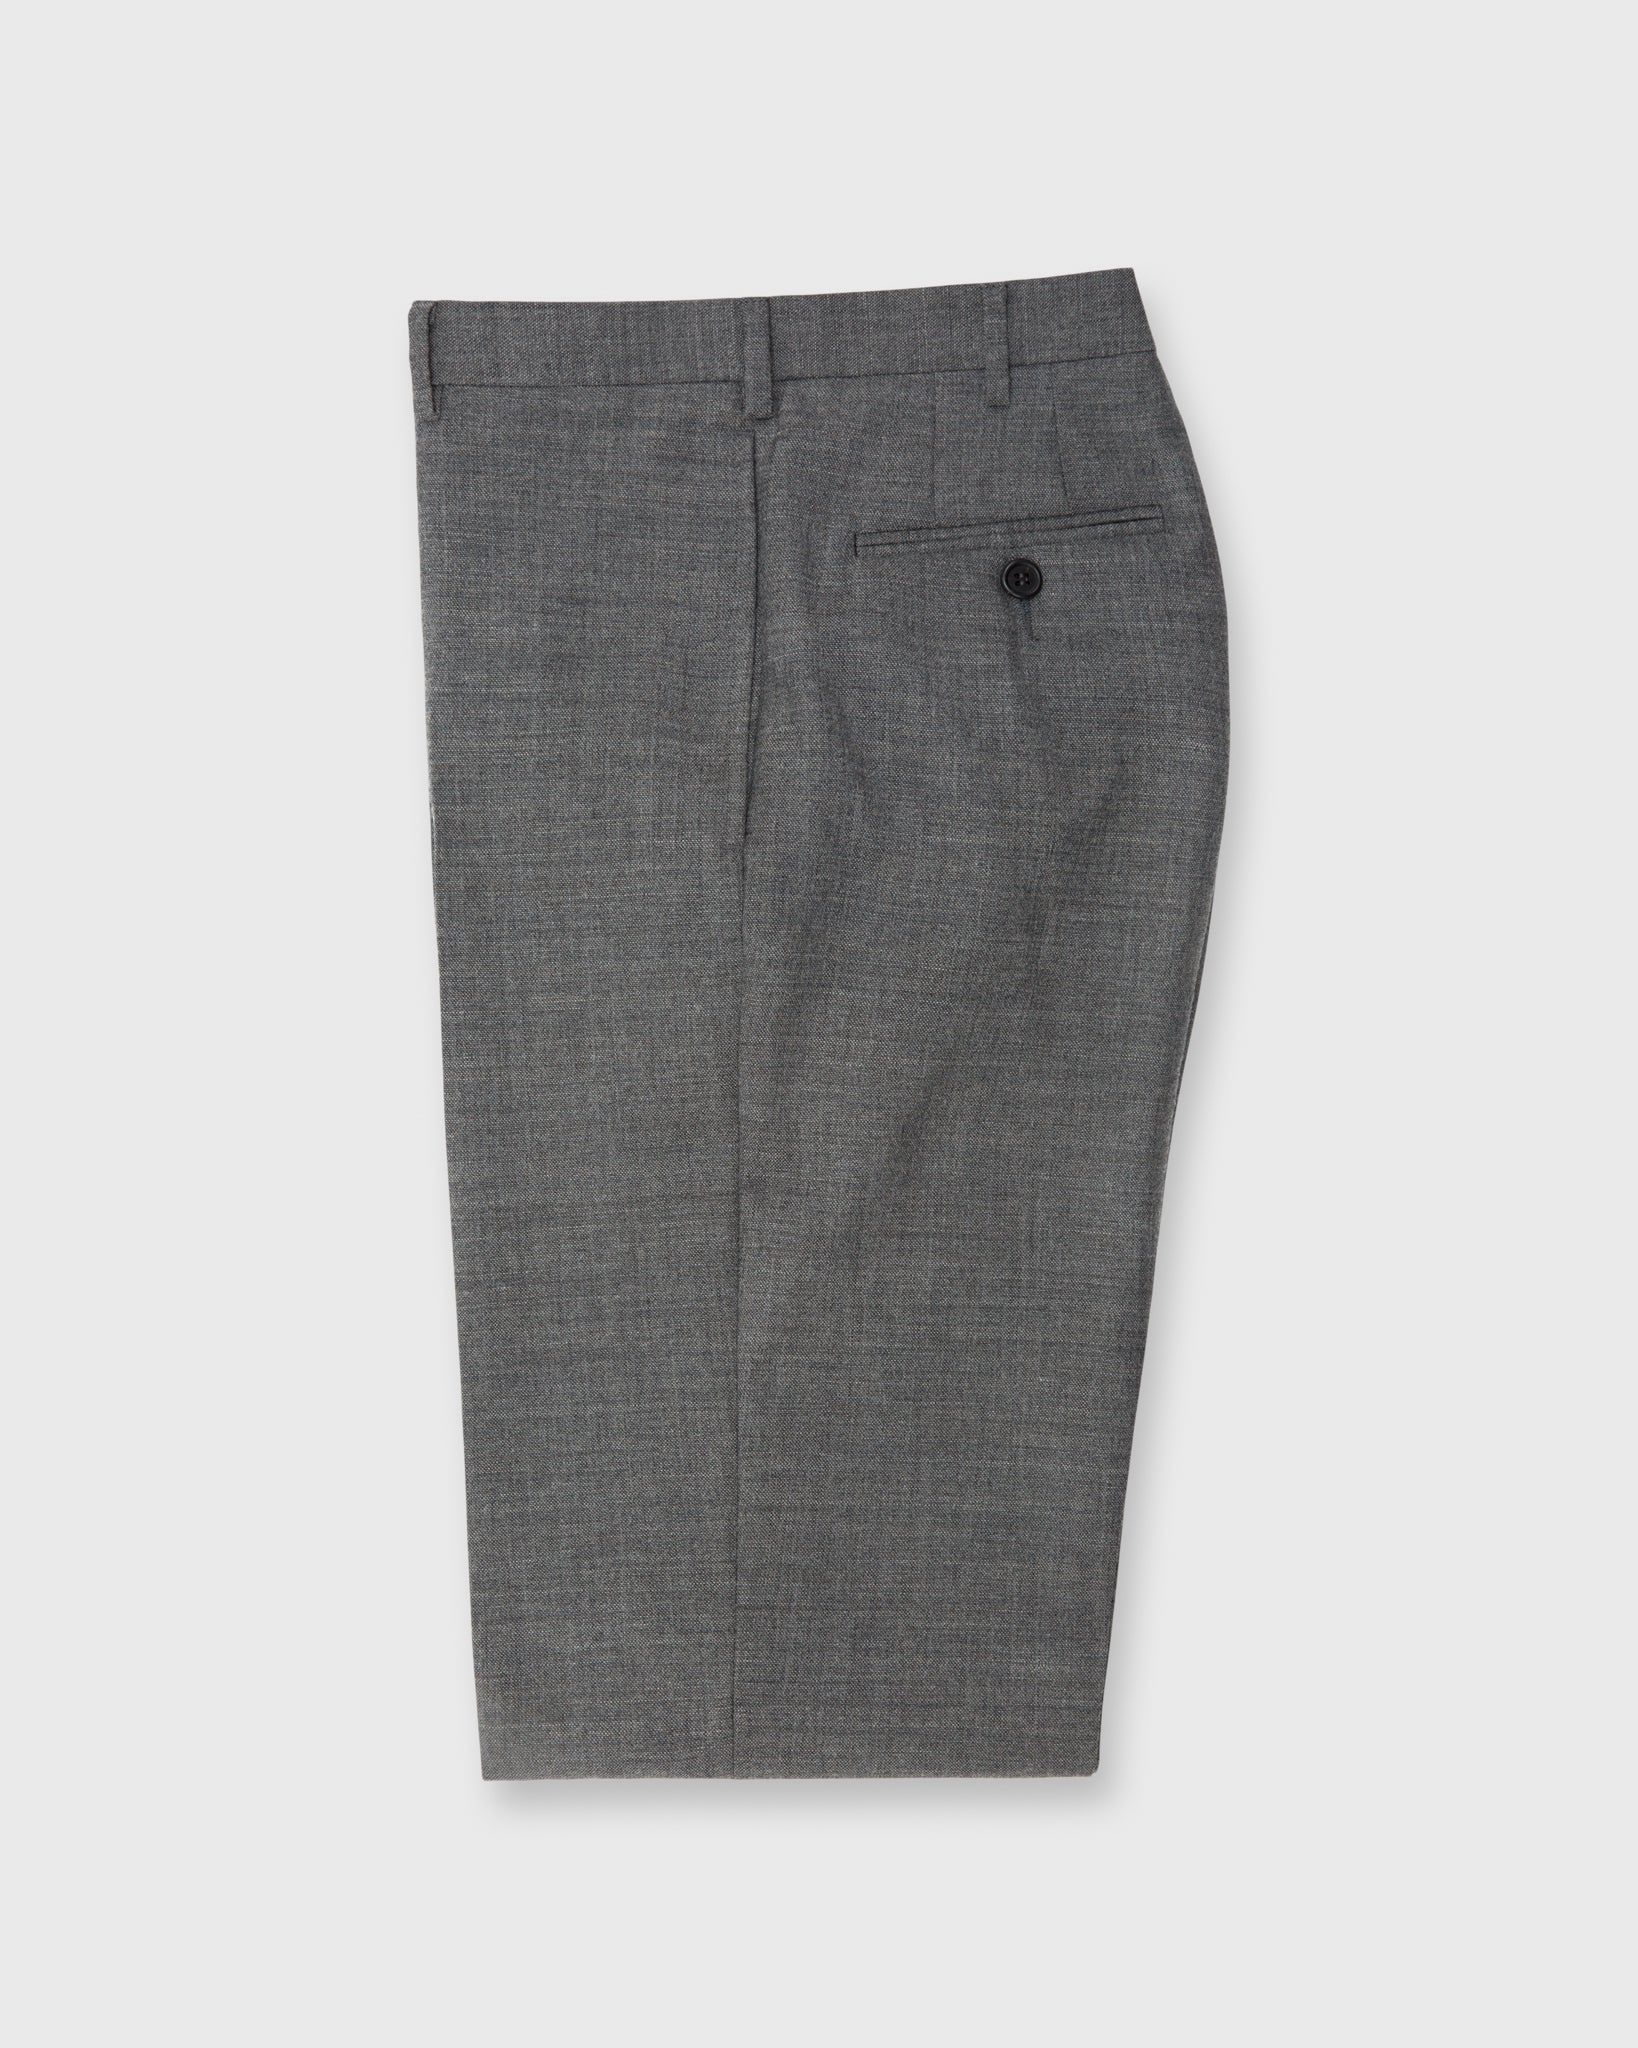 Dress Trouser Mid-Grey High-Twist